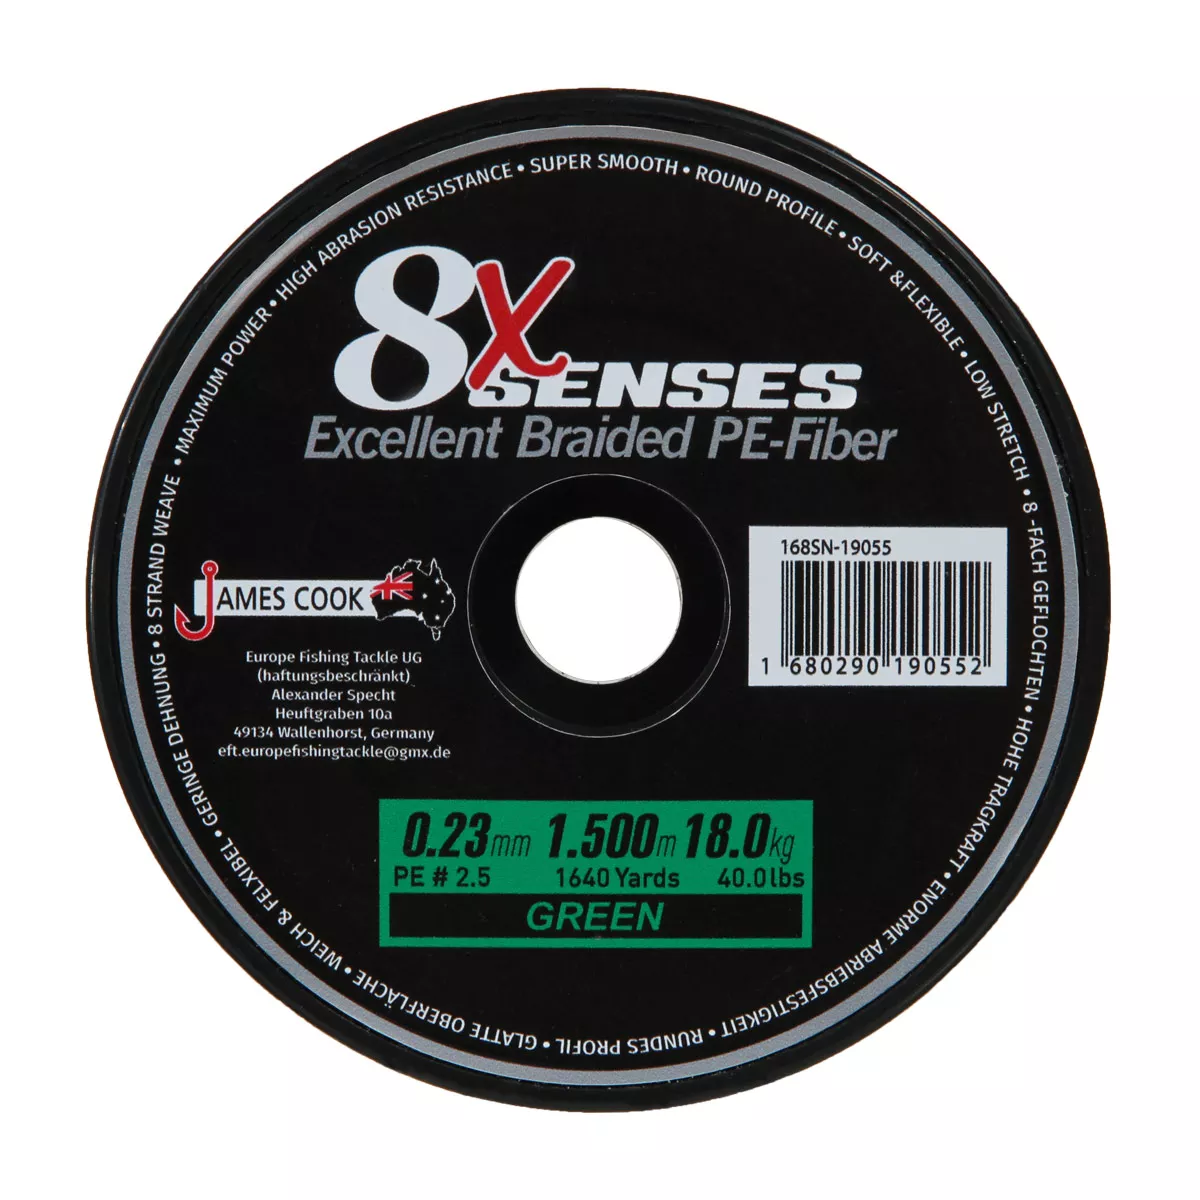 8X Senses Braid 0,27mm 1500m green 24kg